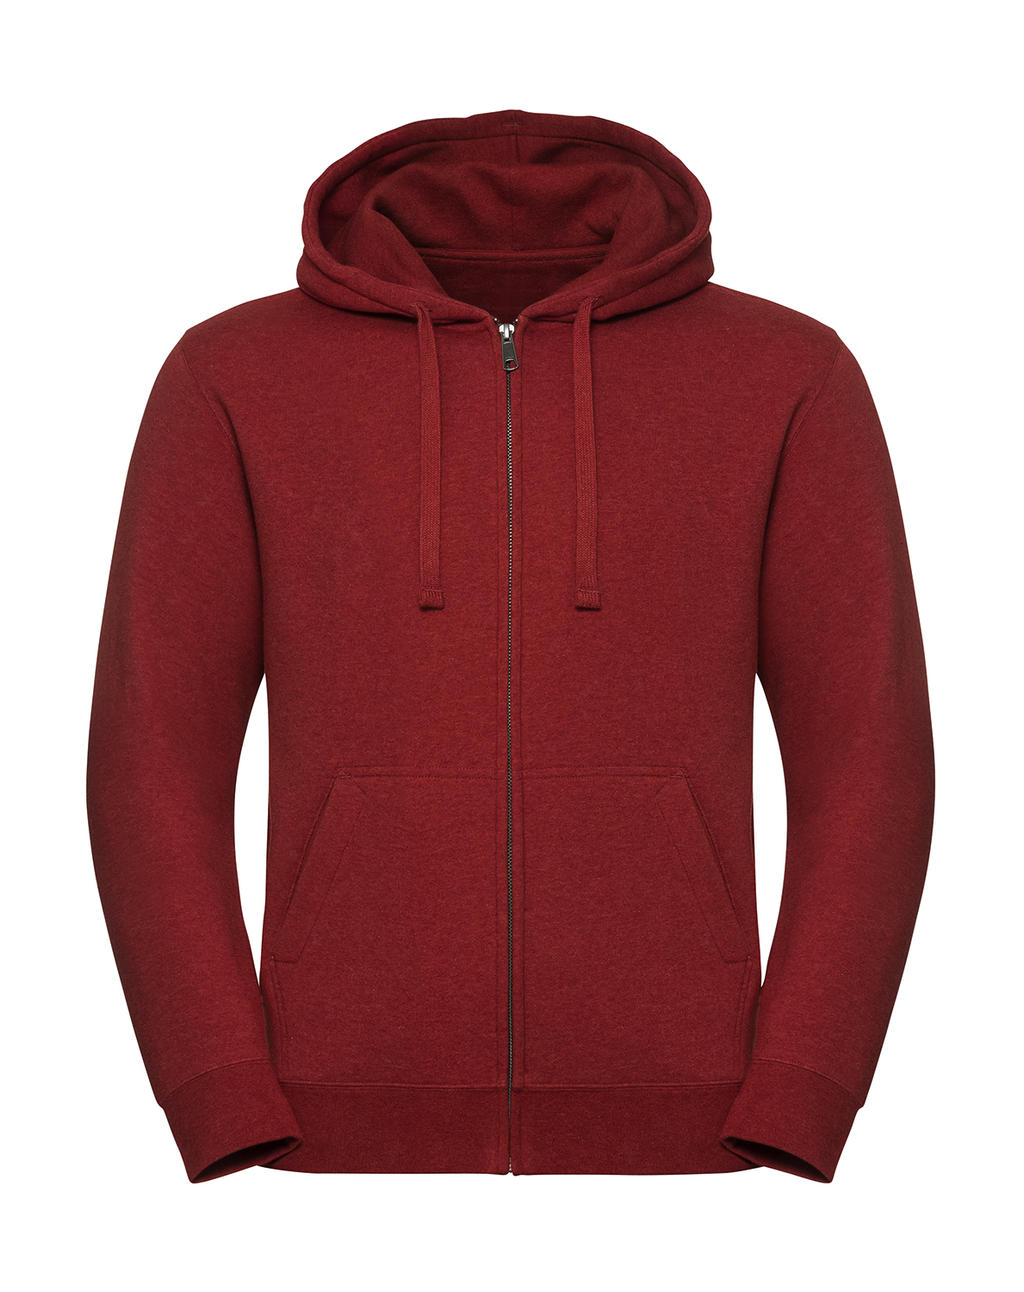  Mens Authentic Melange Zipped Hood Sweat in Farbe Brick Red Melange